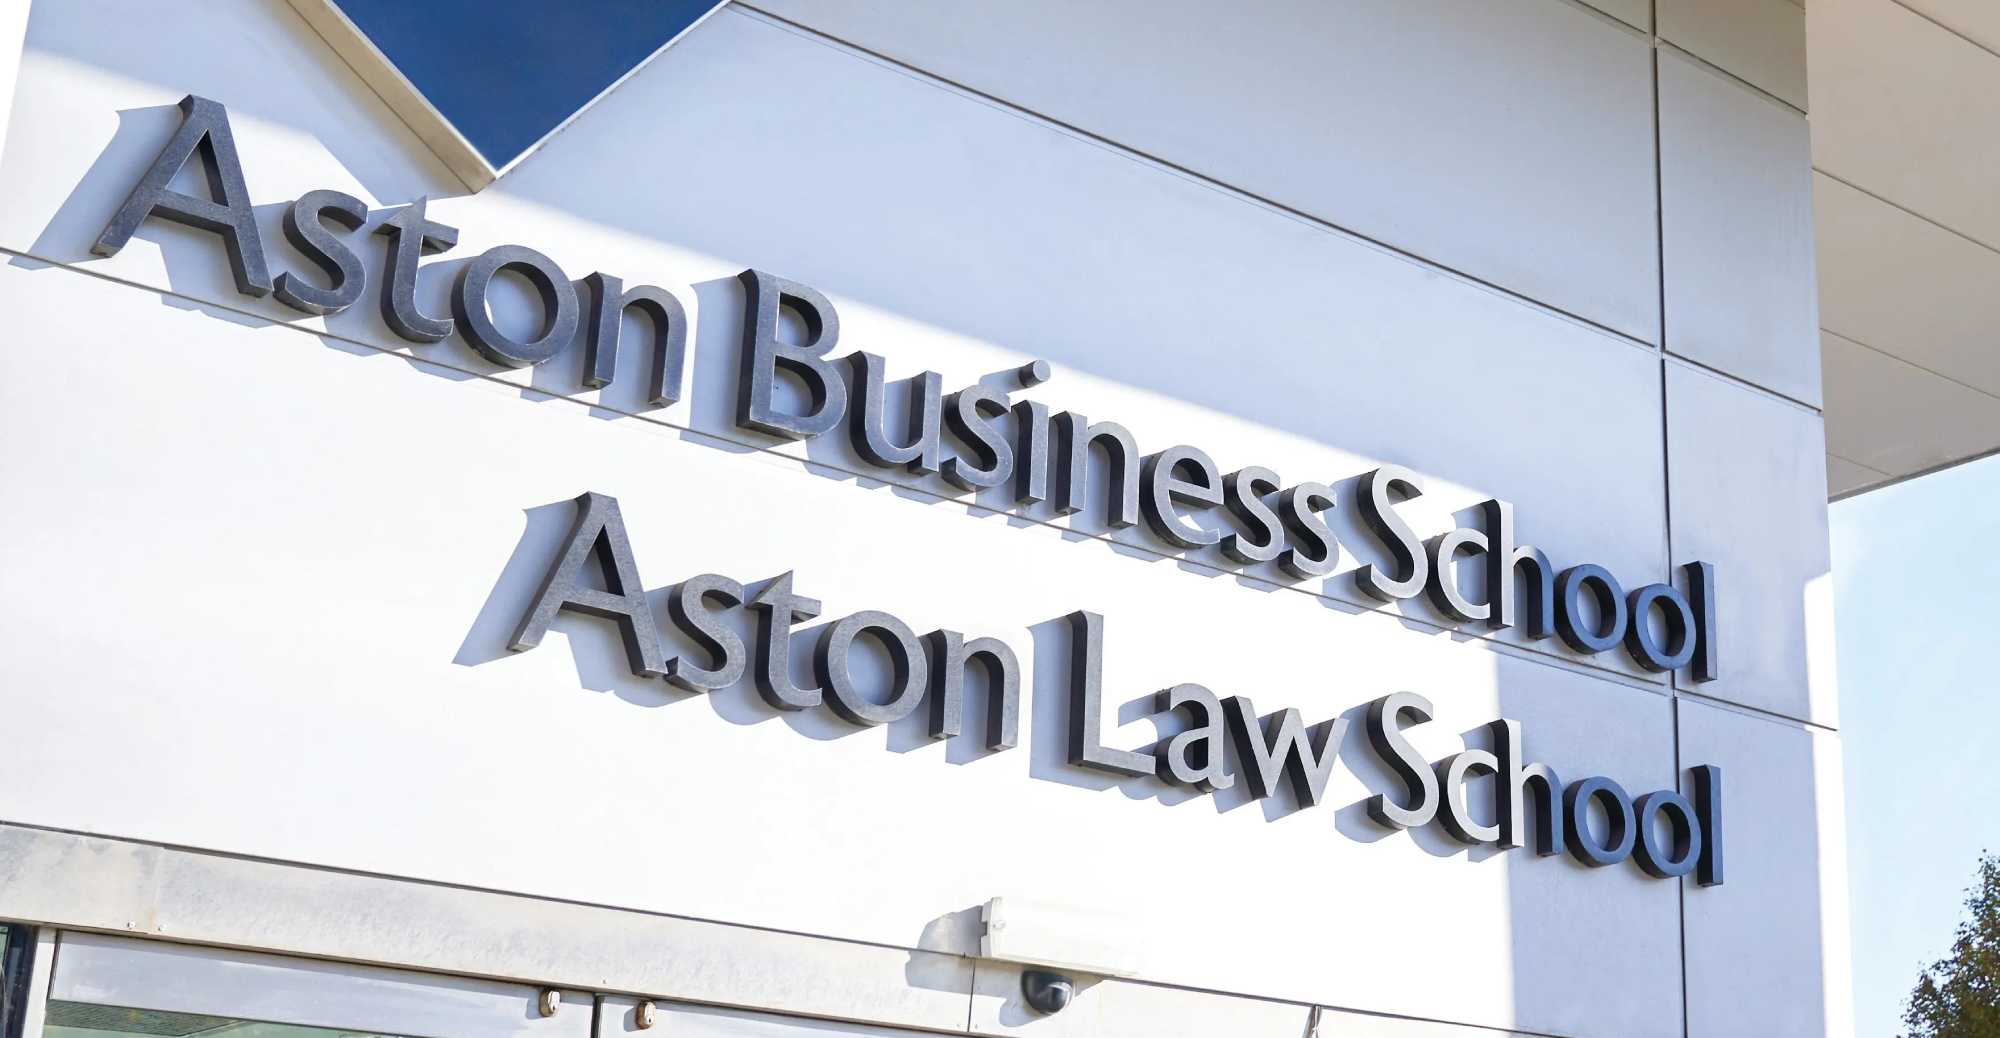 Aston Business Law School.